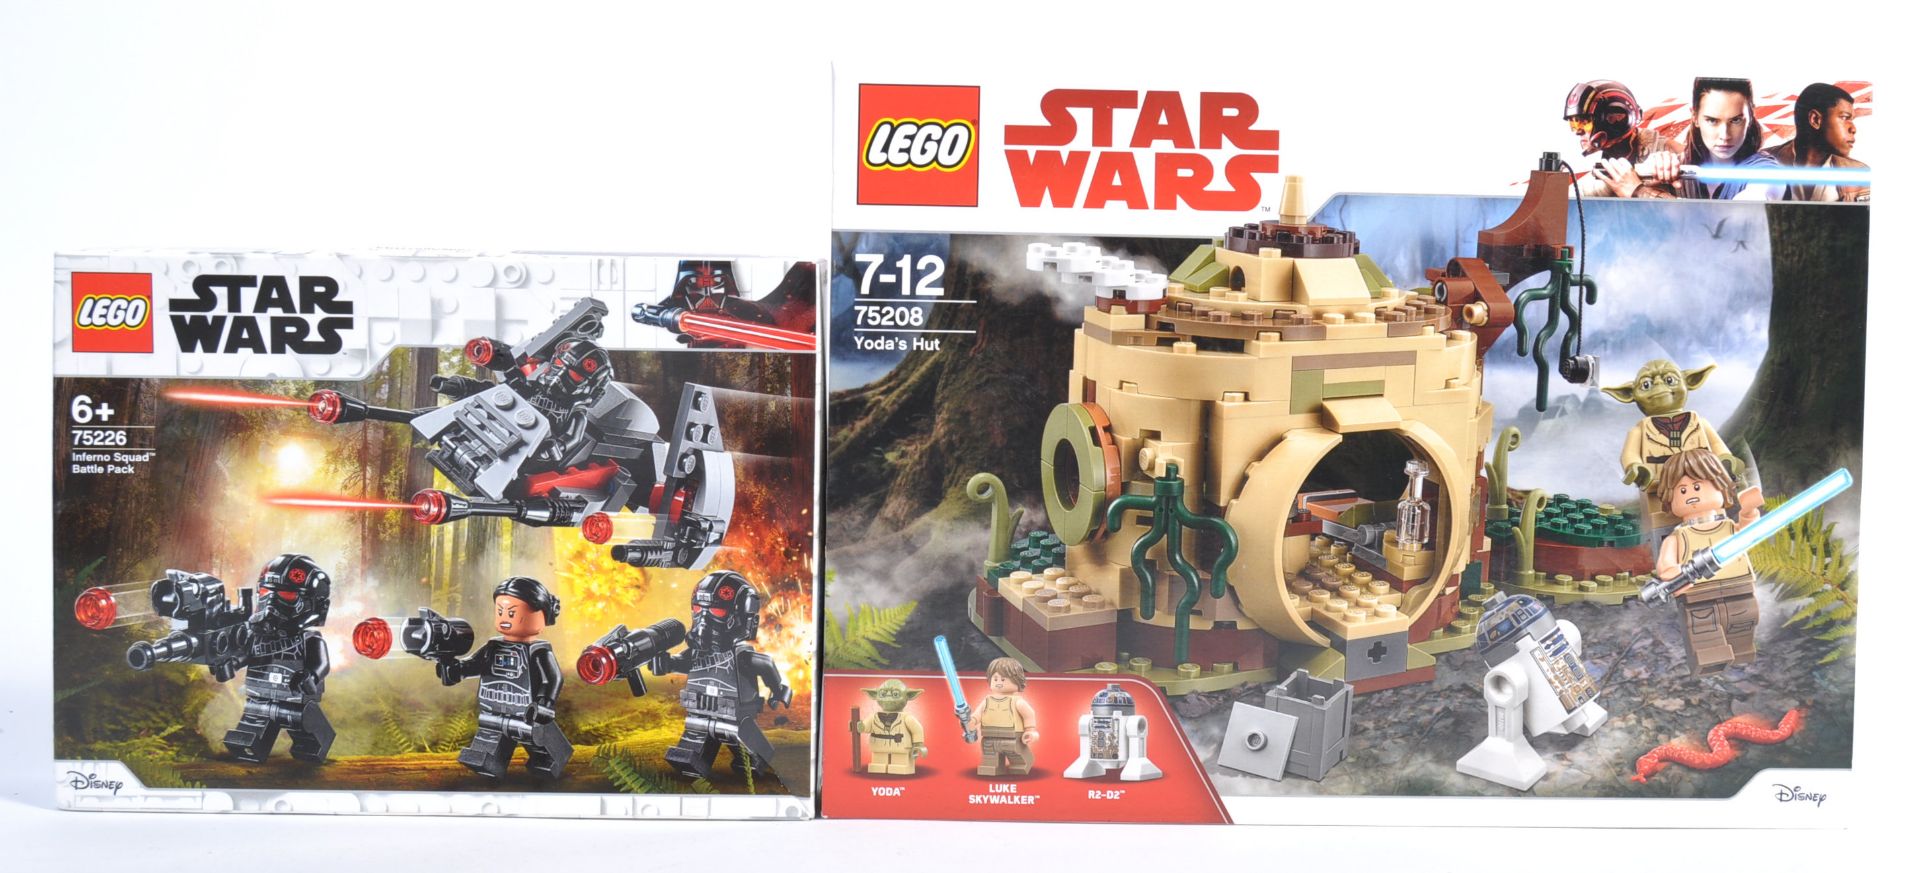 LEGO SETS - STAR WARS - 75226 / 75208 - INFERNO SQUAD BATTLE PACK - YODA'S HUT